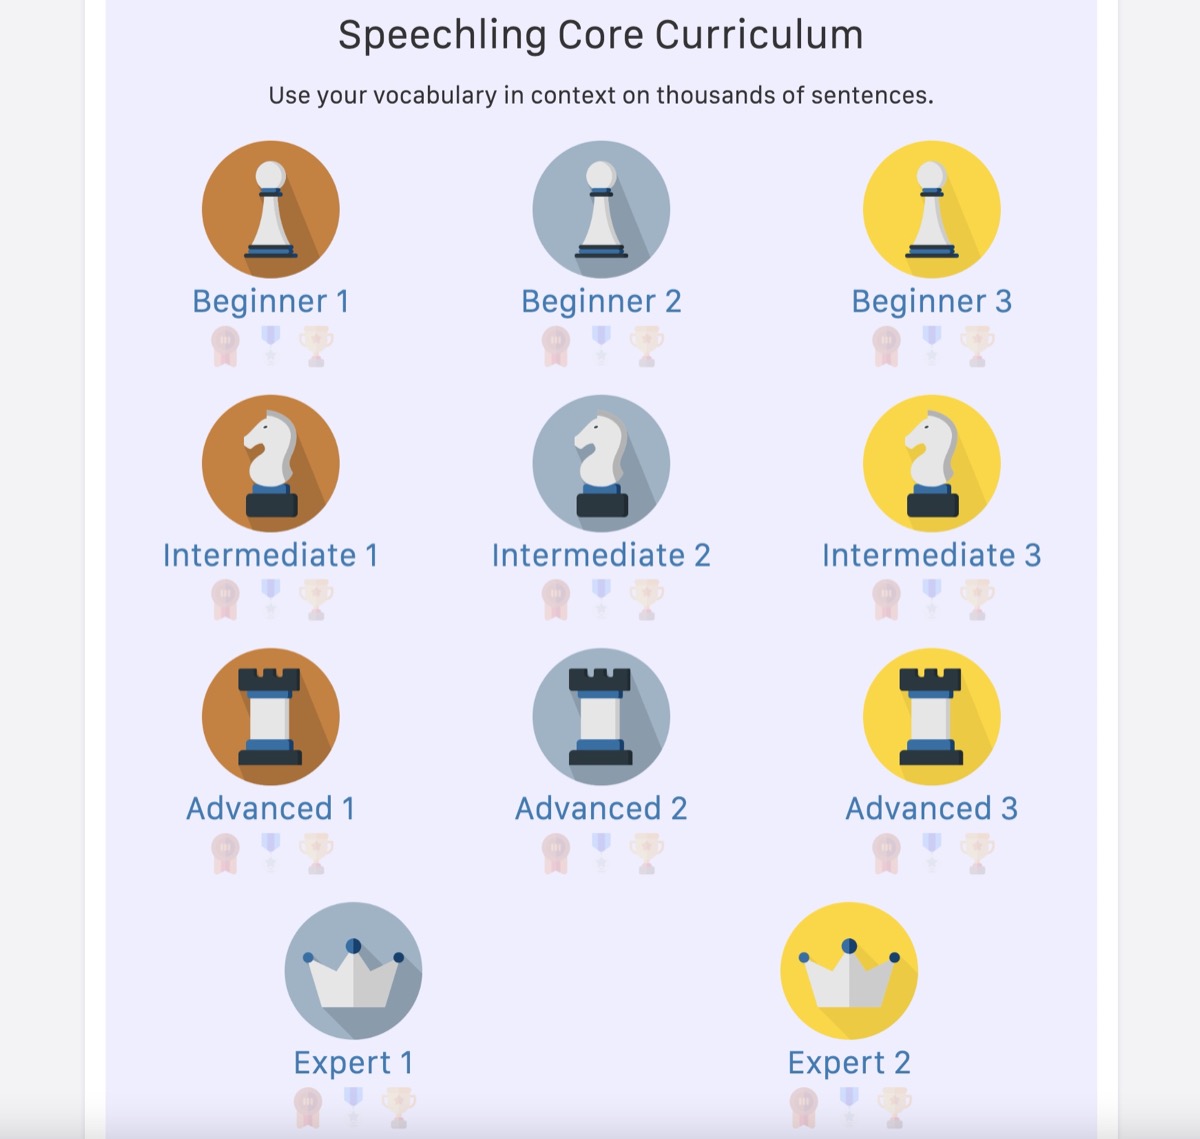 speechling core curriculum